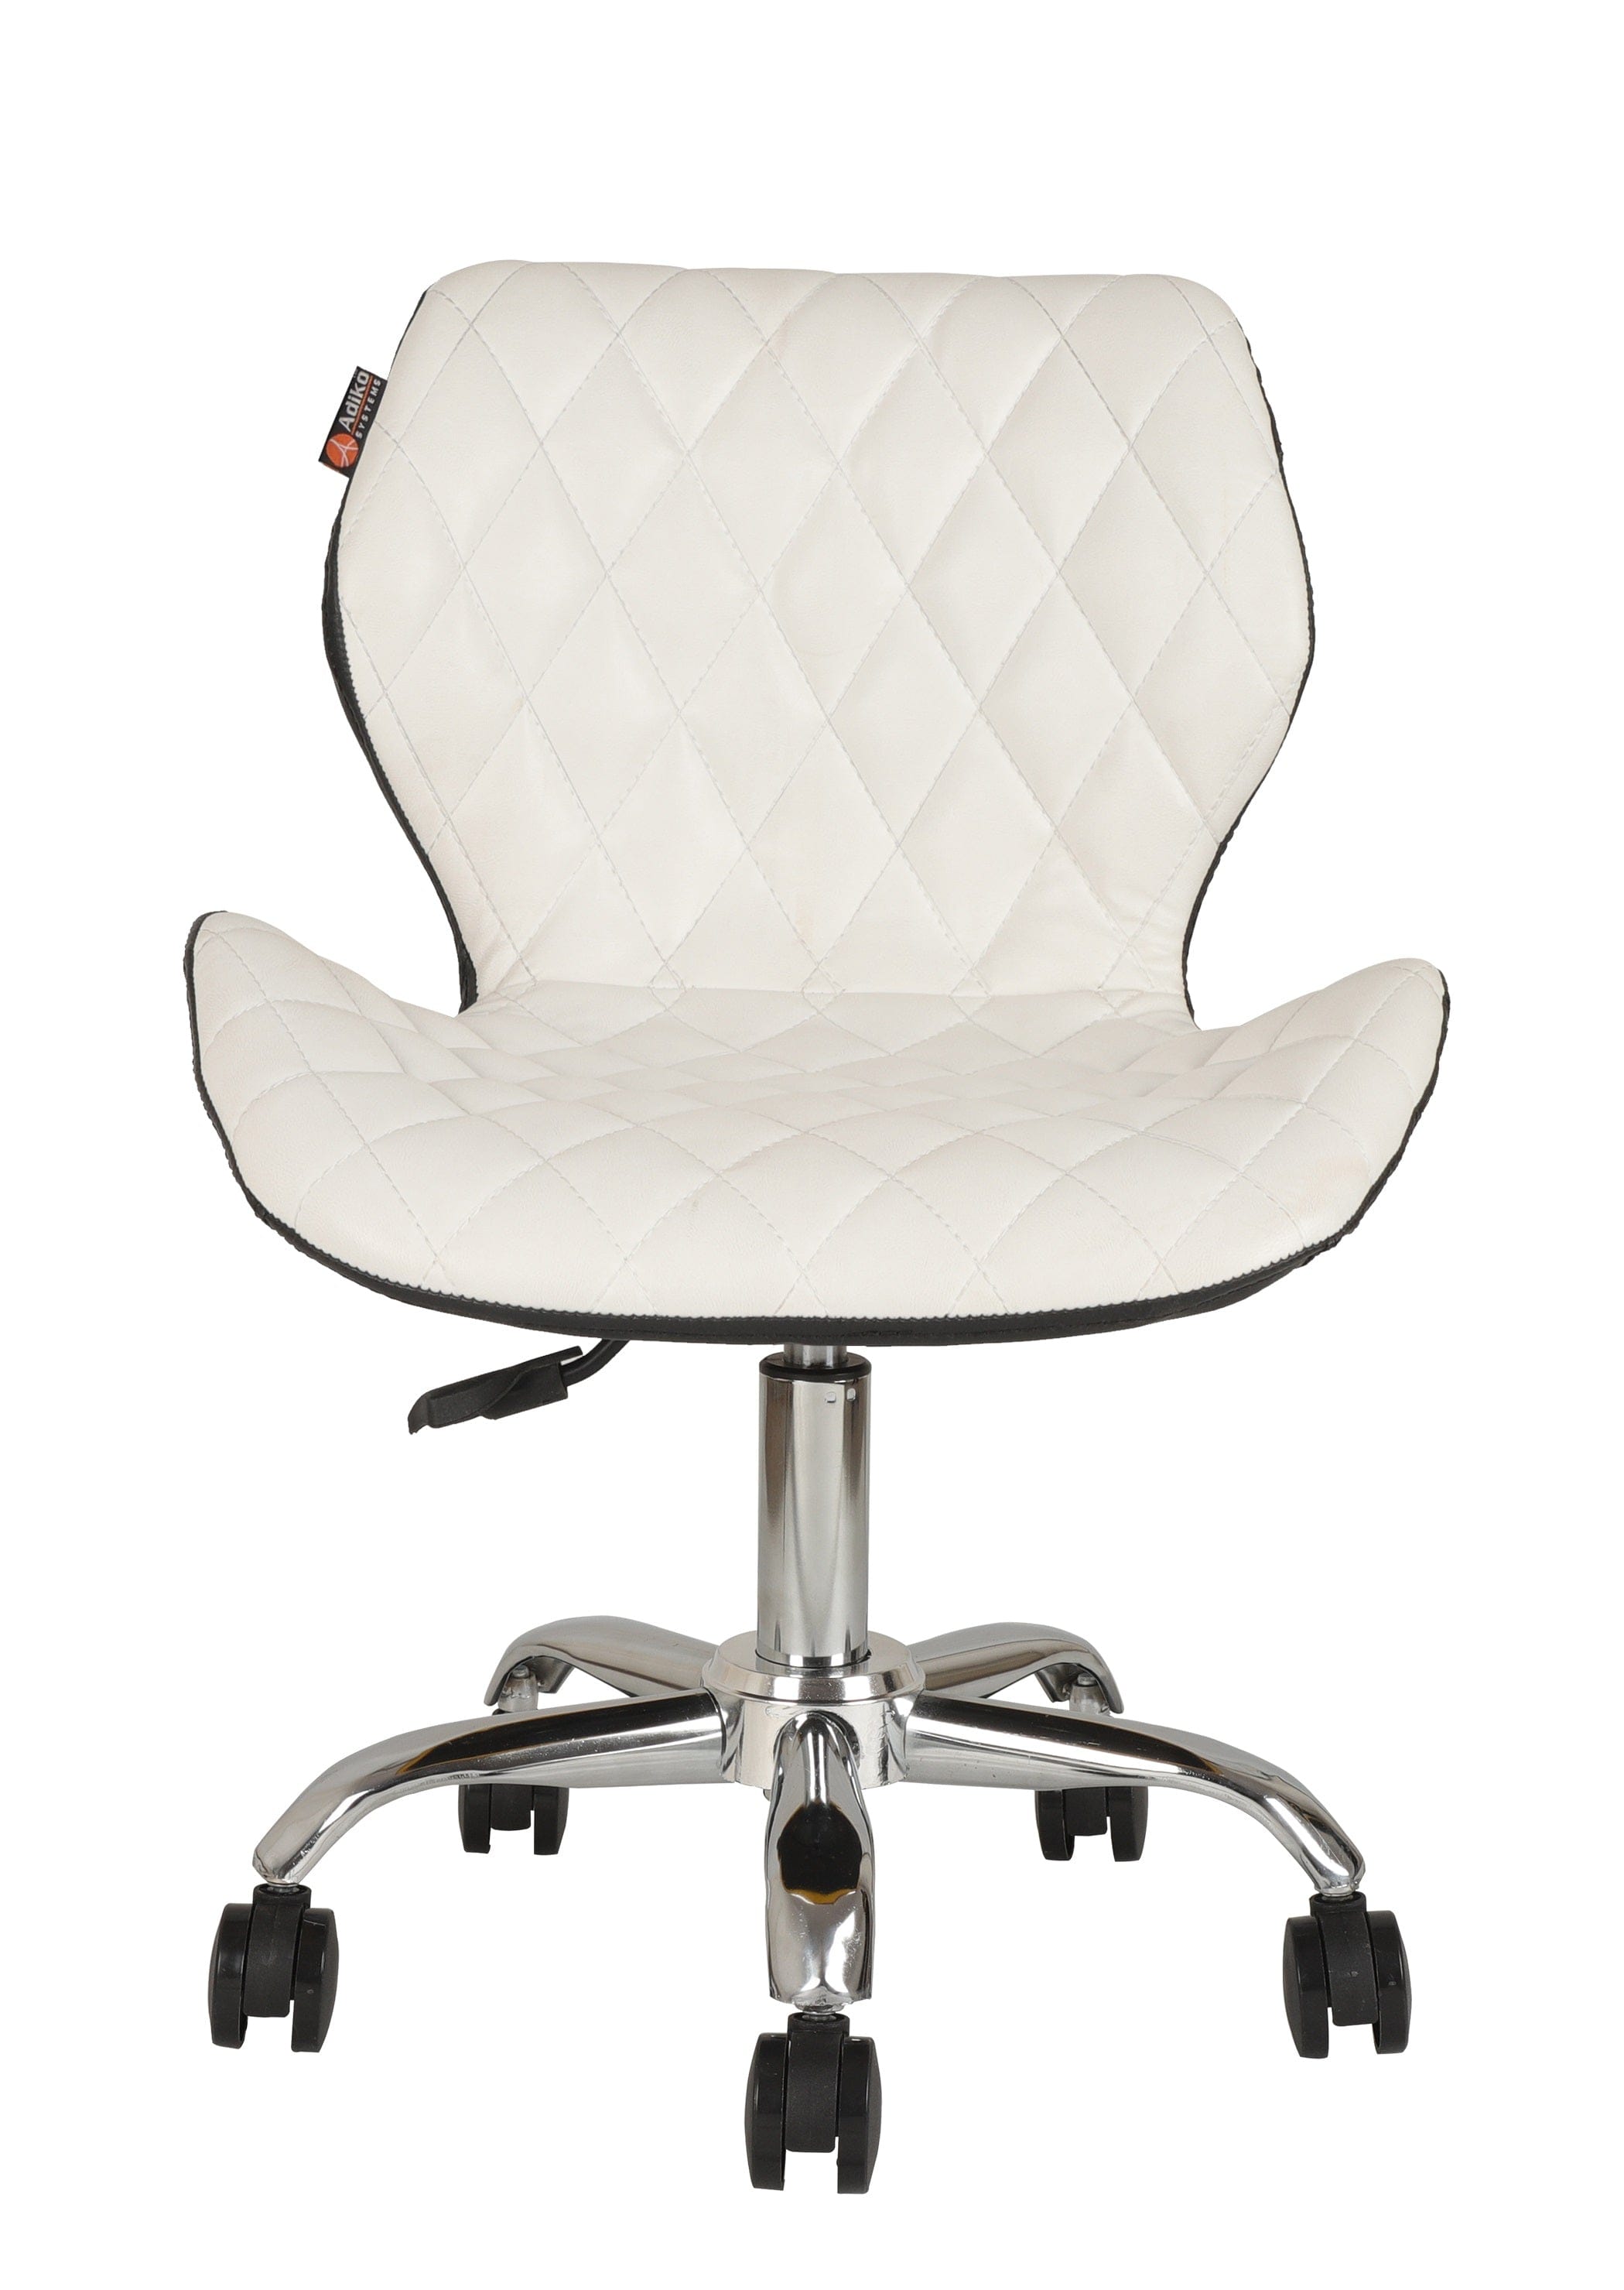 Adiko Flower Lounge Chair in White